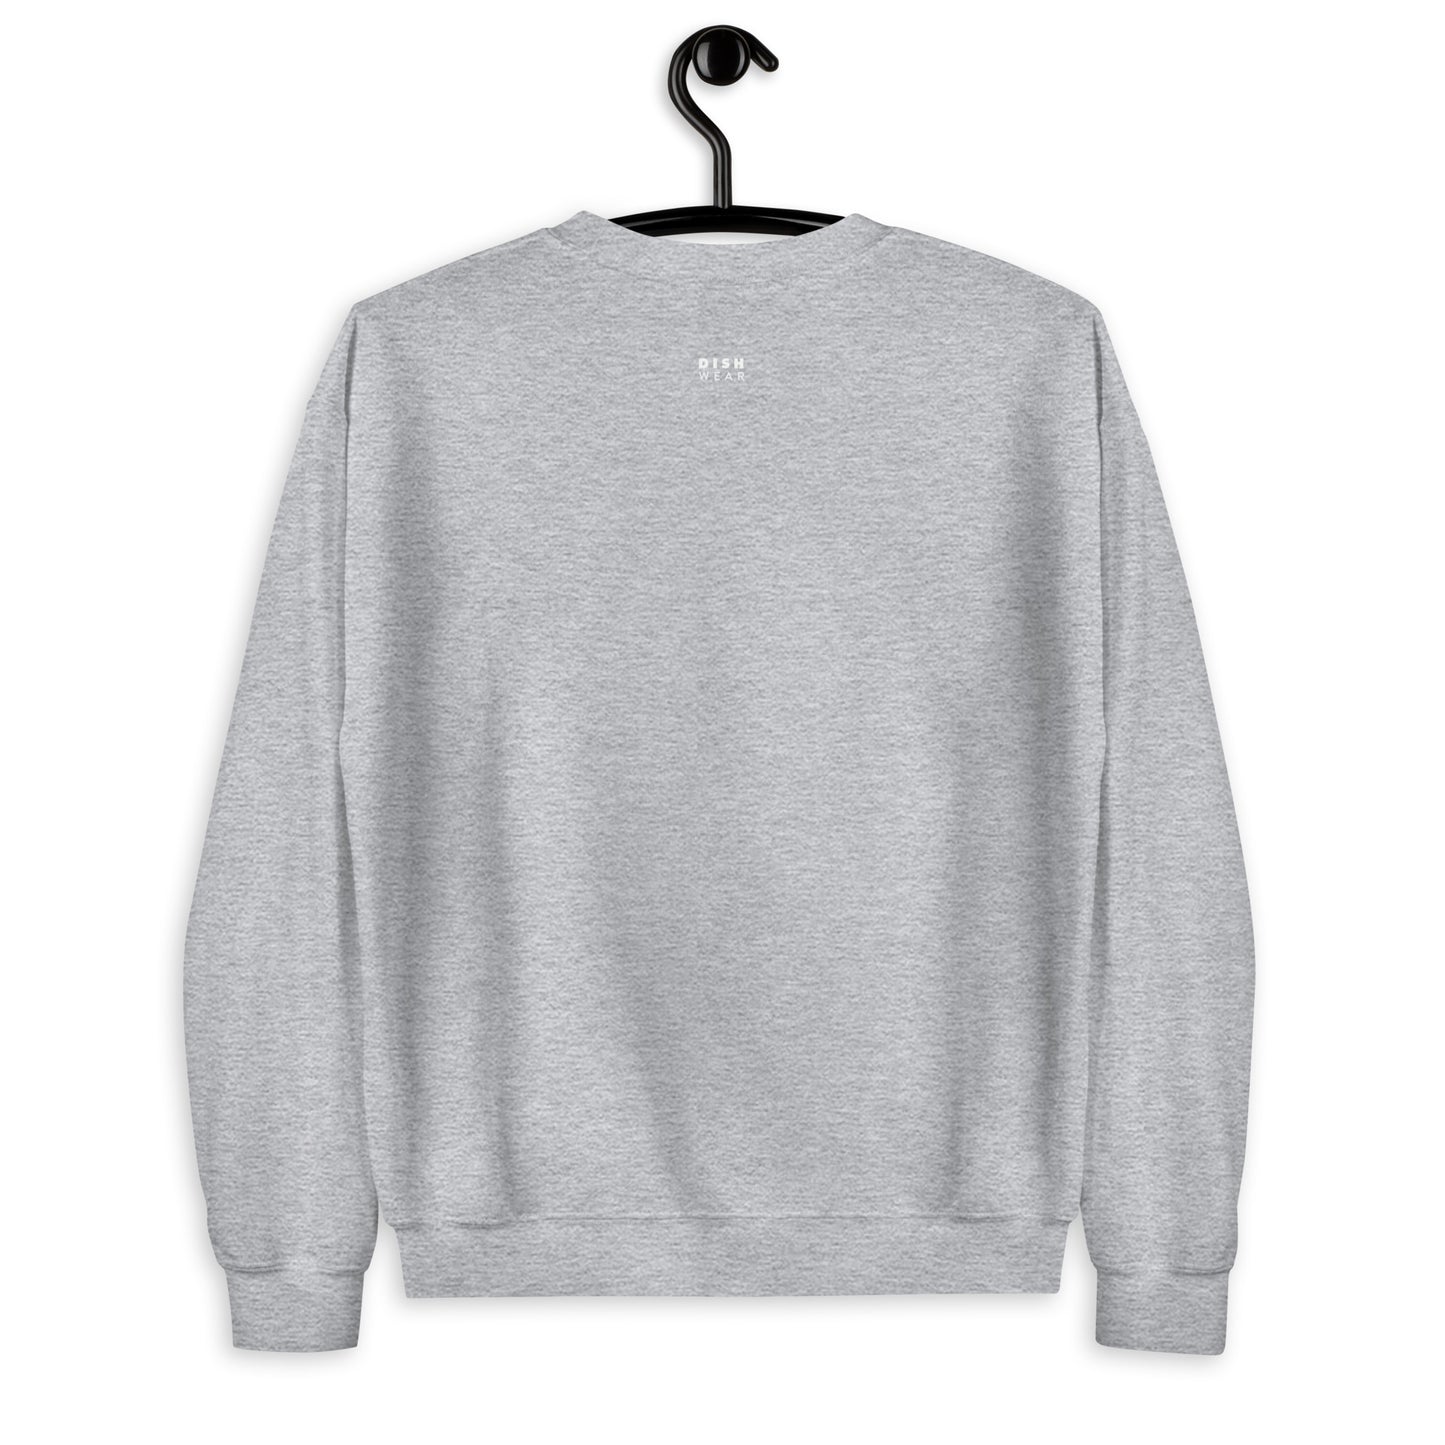 Peppermint Sweatshirt - Straight Font